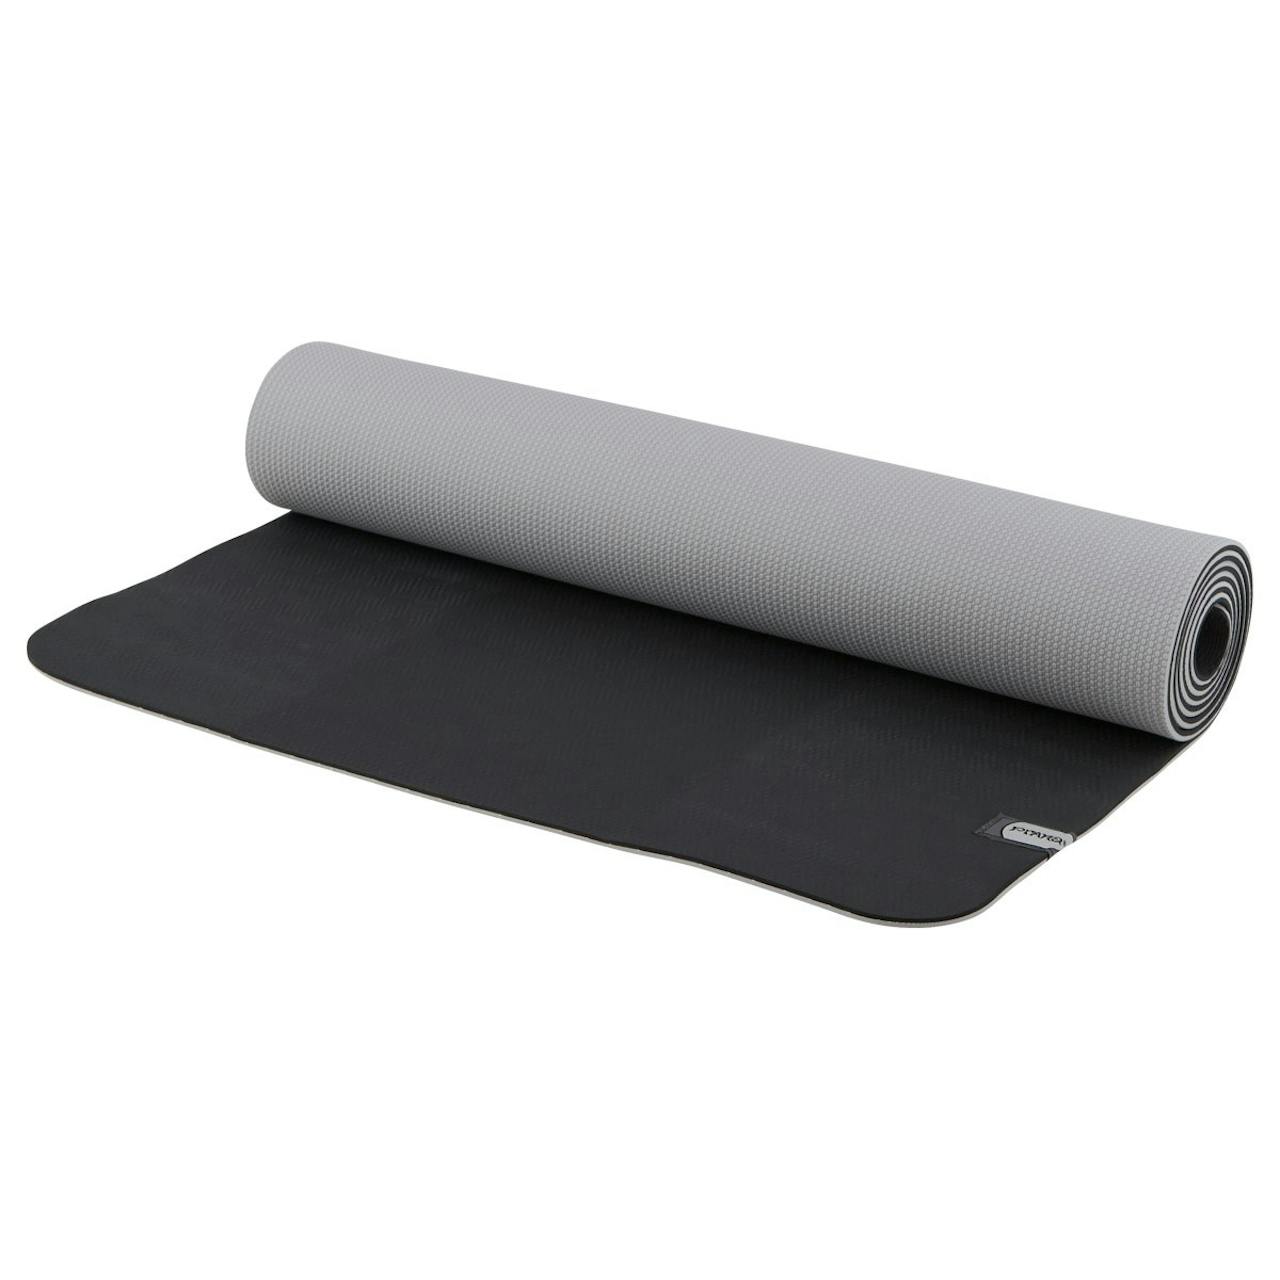 prAna E.C.O. Yoga Mat - Black Vapor, undefined